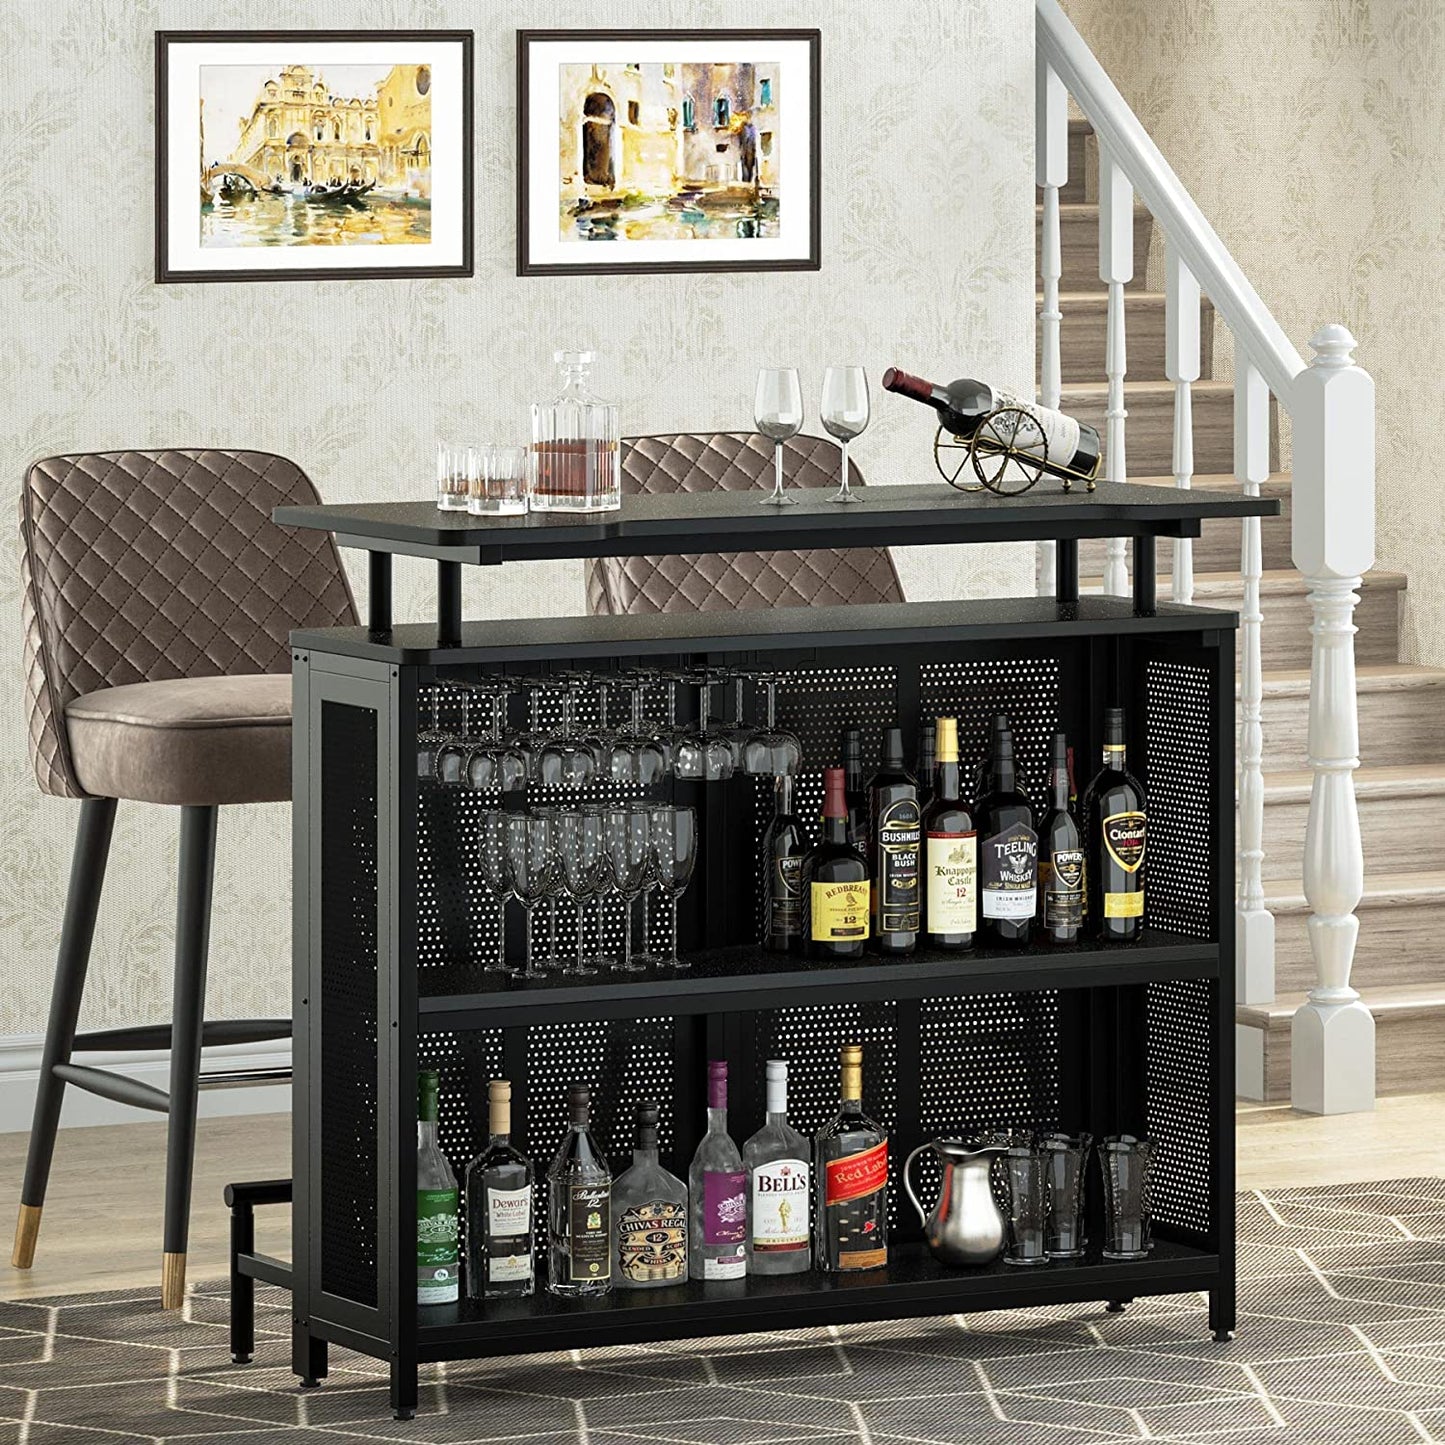 Home Bar Unit, 3 Tier Liquor Bar Table with Stemware Racks and Wine Storage Shelves, Wine Bar Cabinet Mini Bar for Home Kitchen Pub (Black)